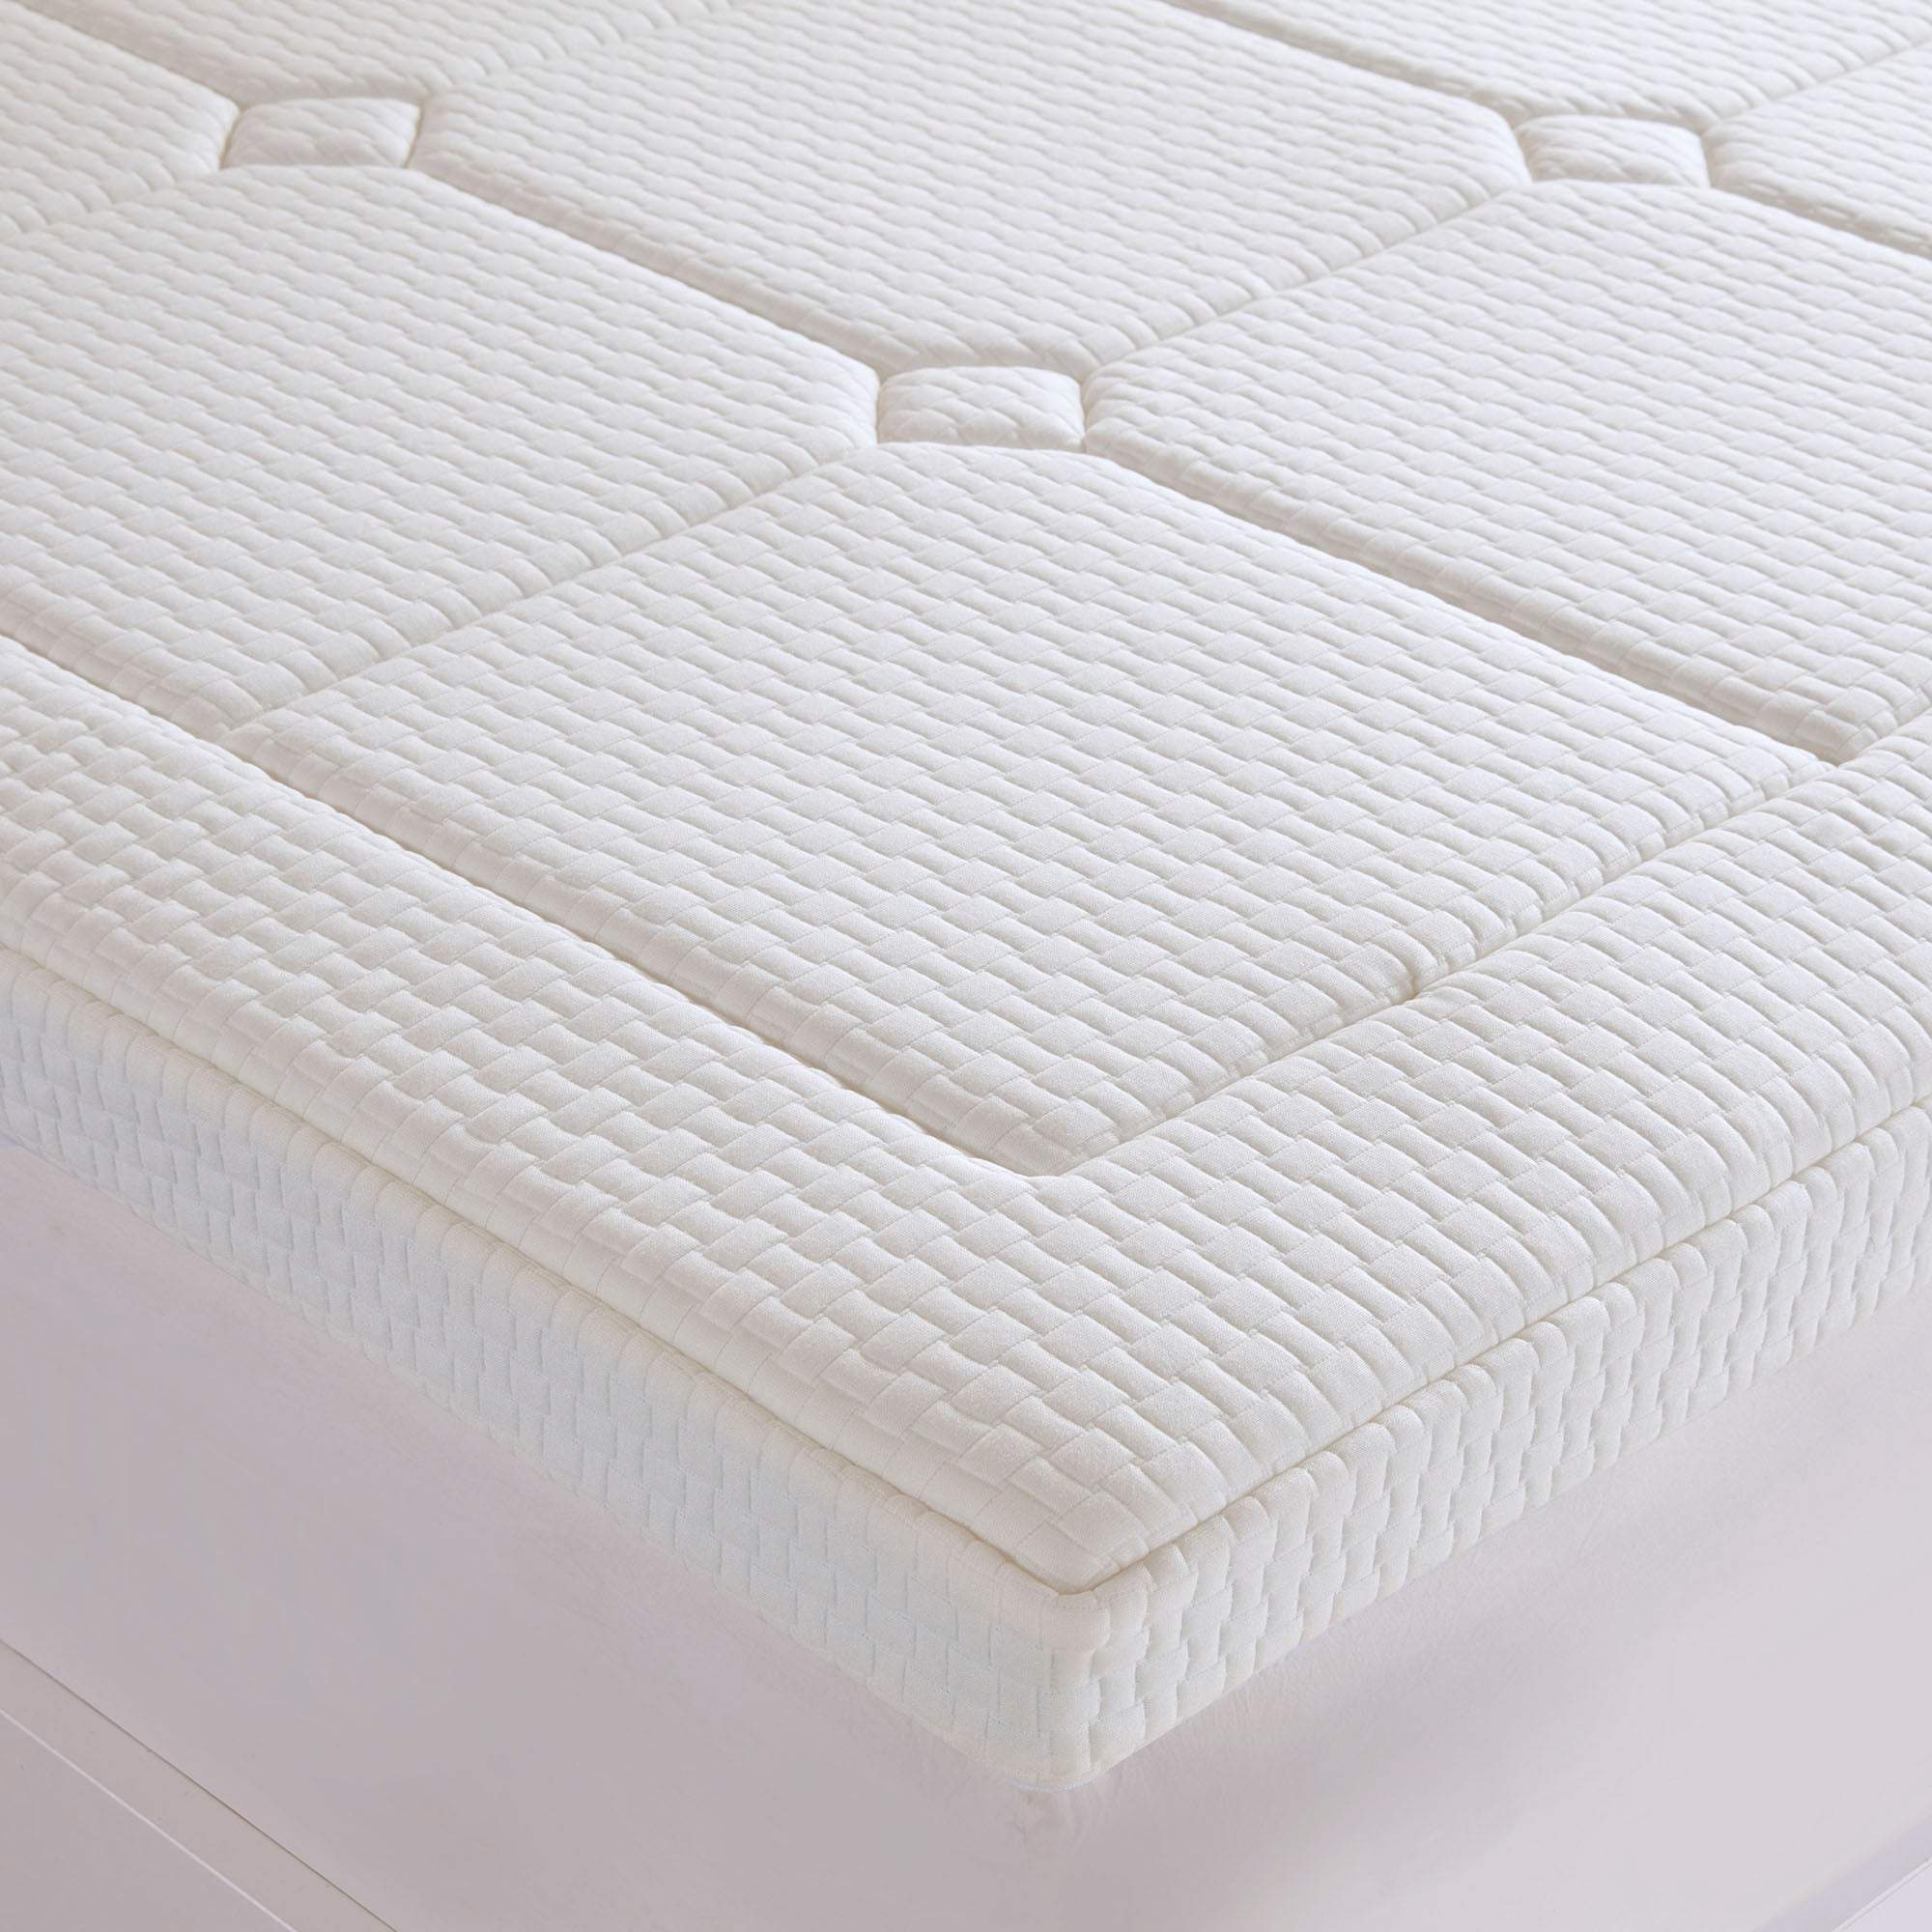 3" Quilted Memory Foam White Mattress Topper Mattress Topper By Olliix/JLA HOME (E & E Co., Ltd)